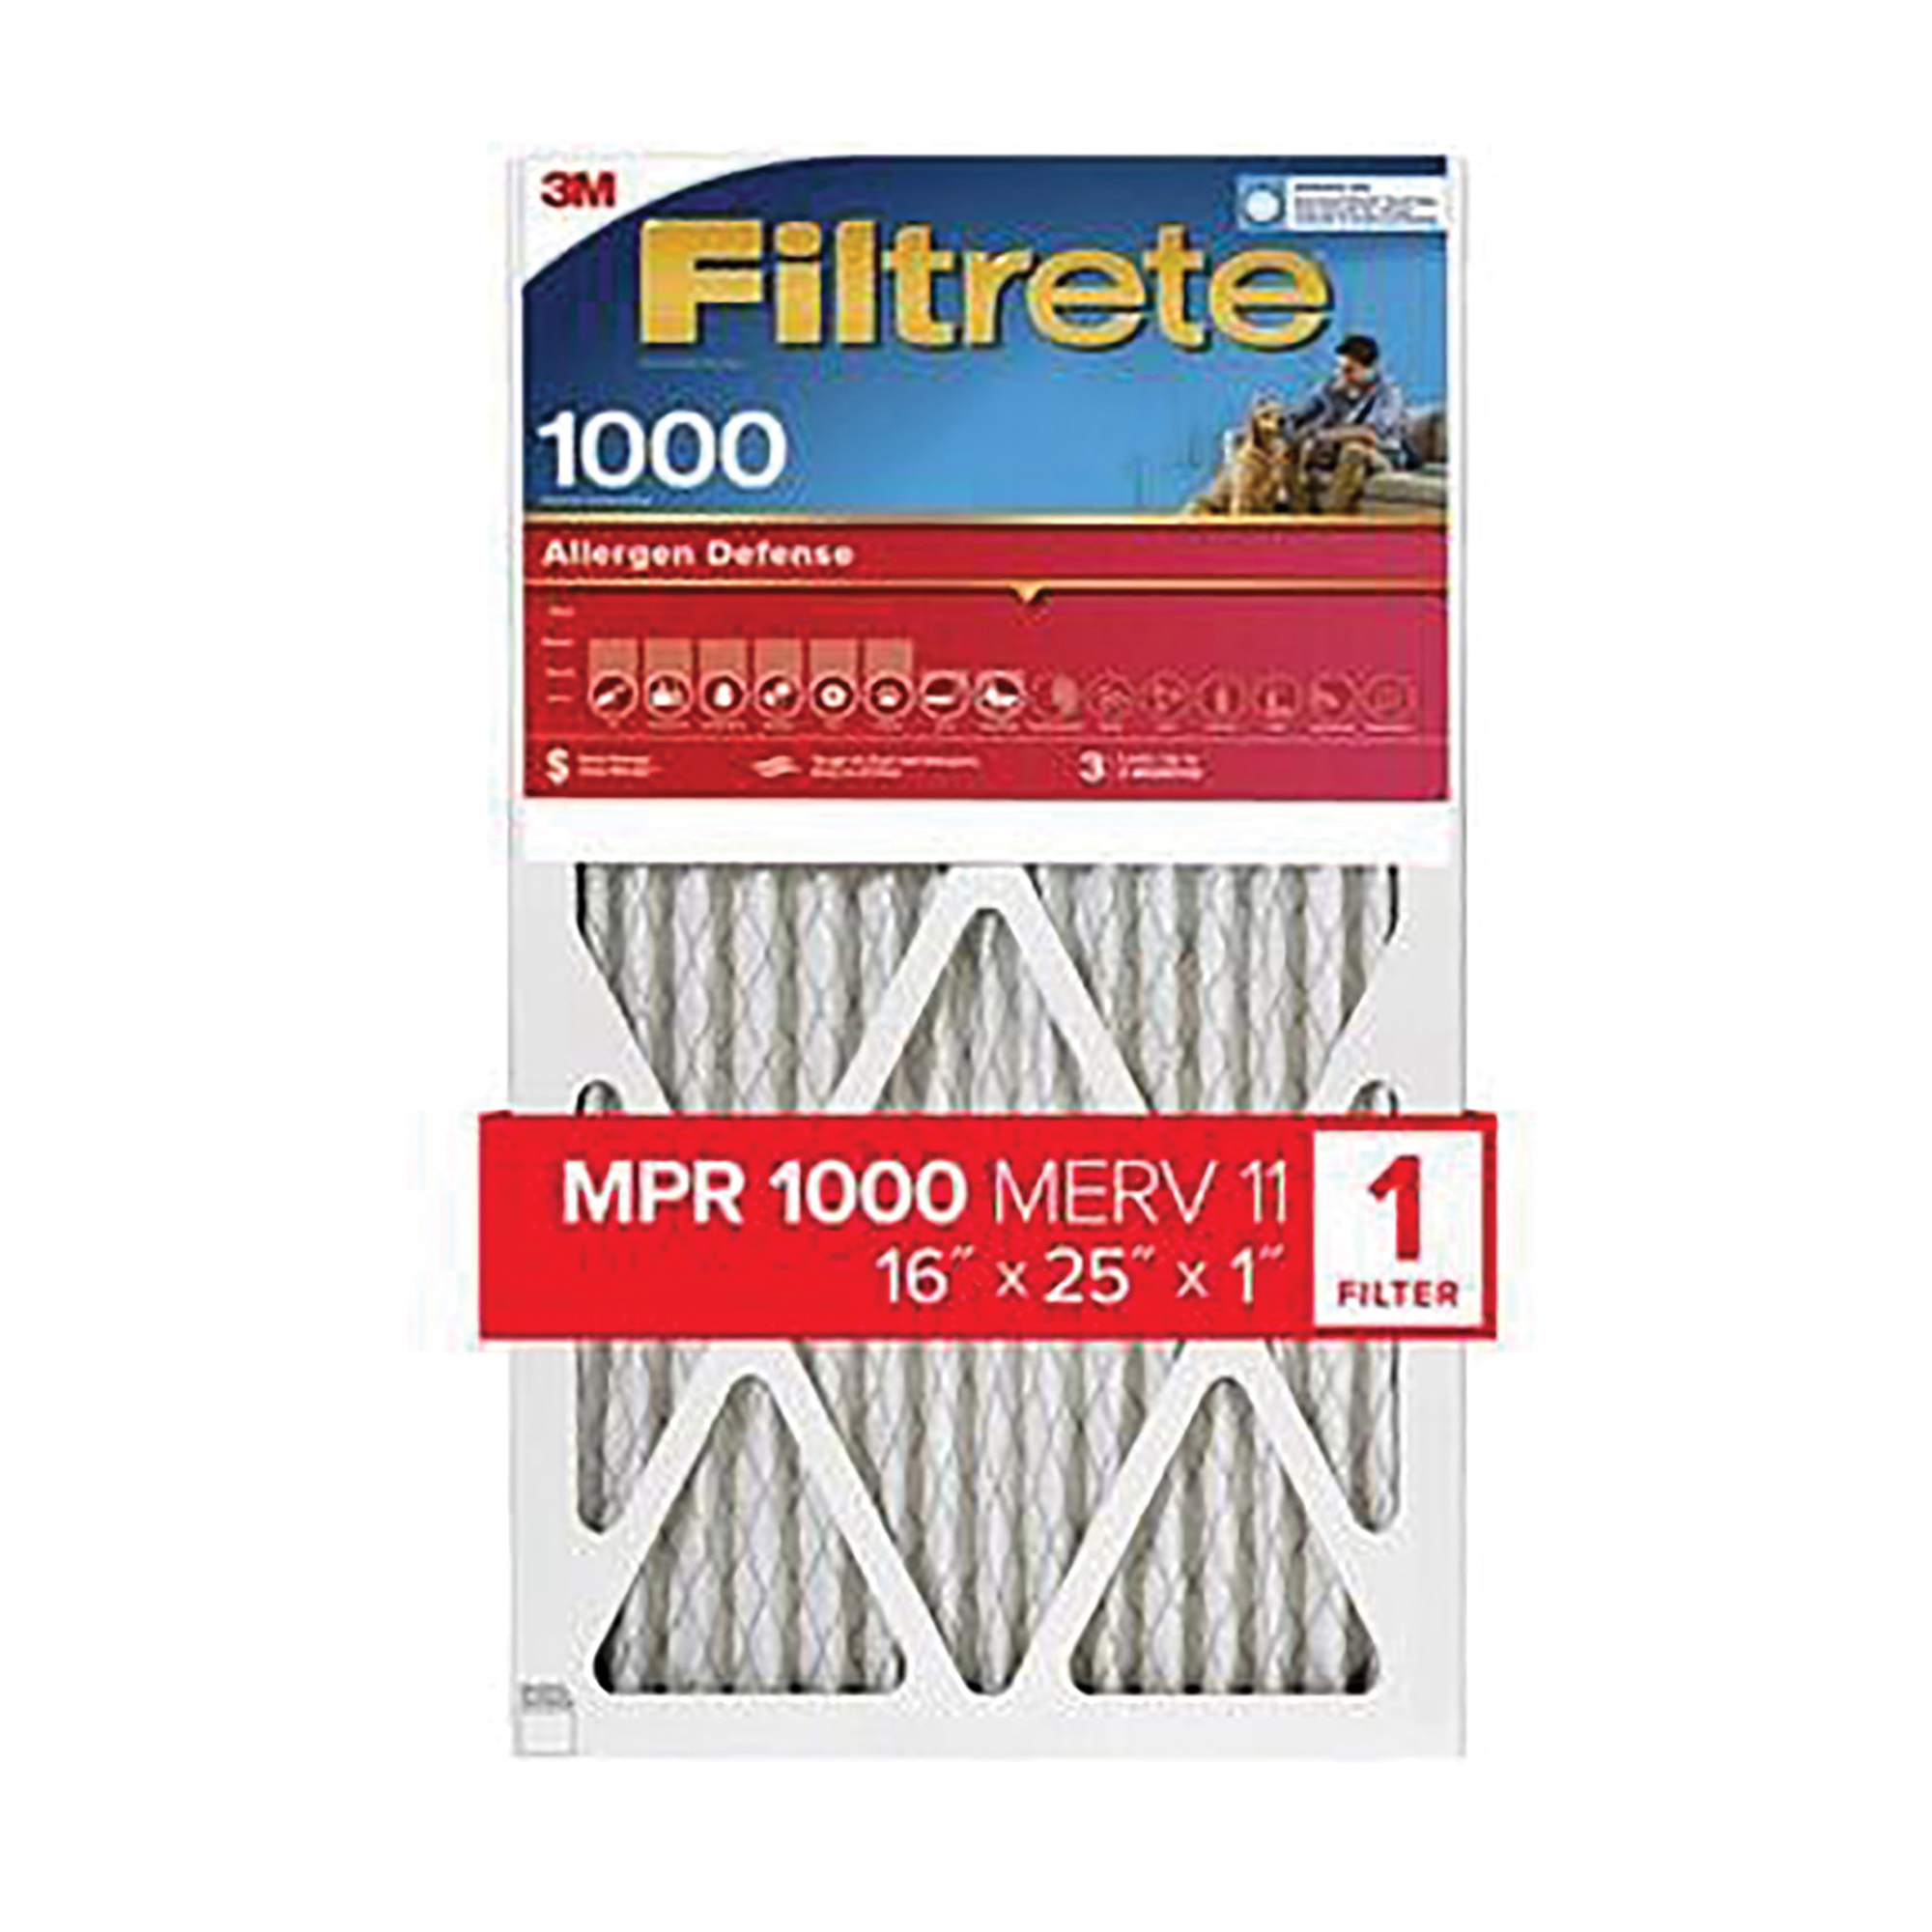 9801-4 Air Filter, 16 in L, 25 in W, 11 MERV, 1000 MPR